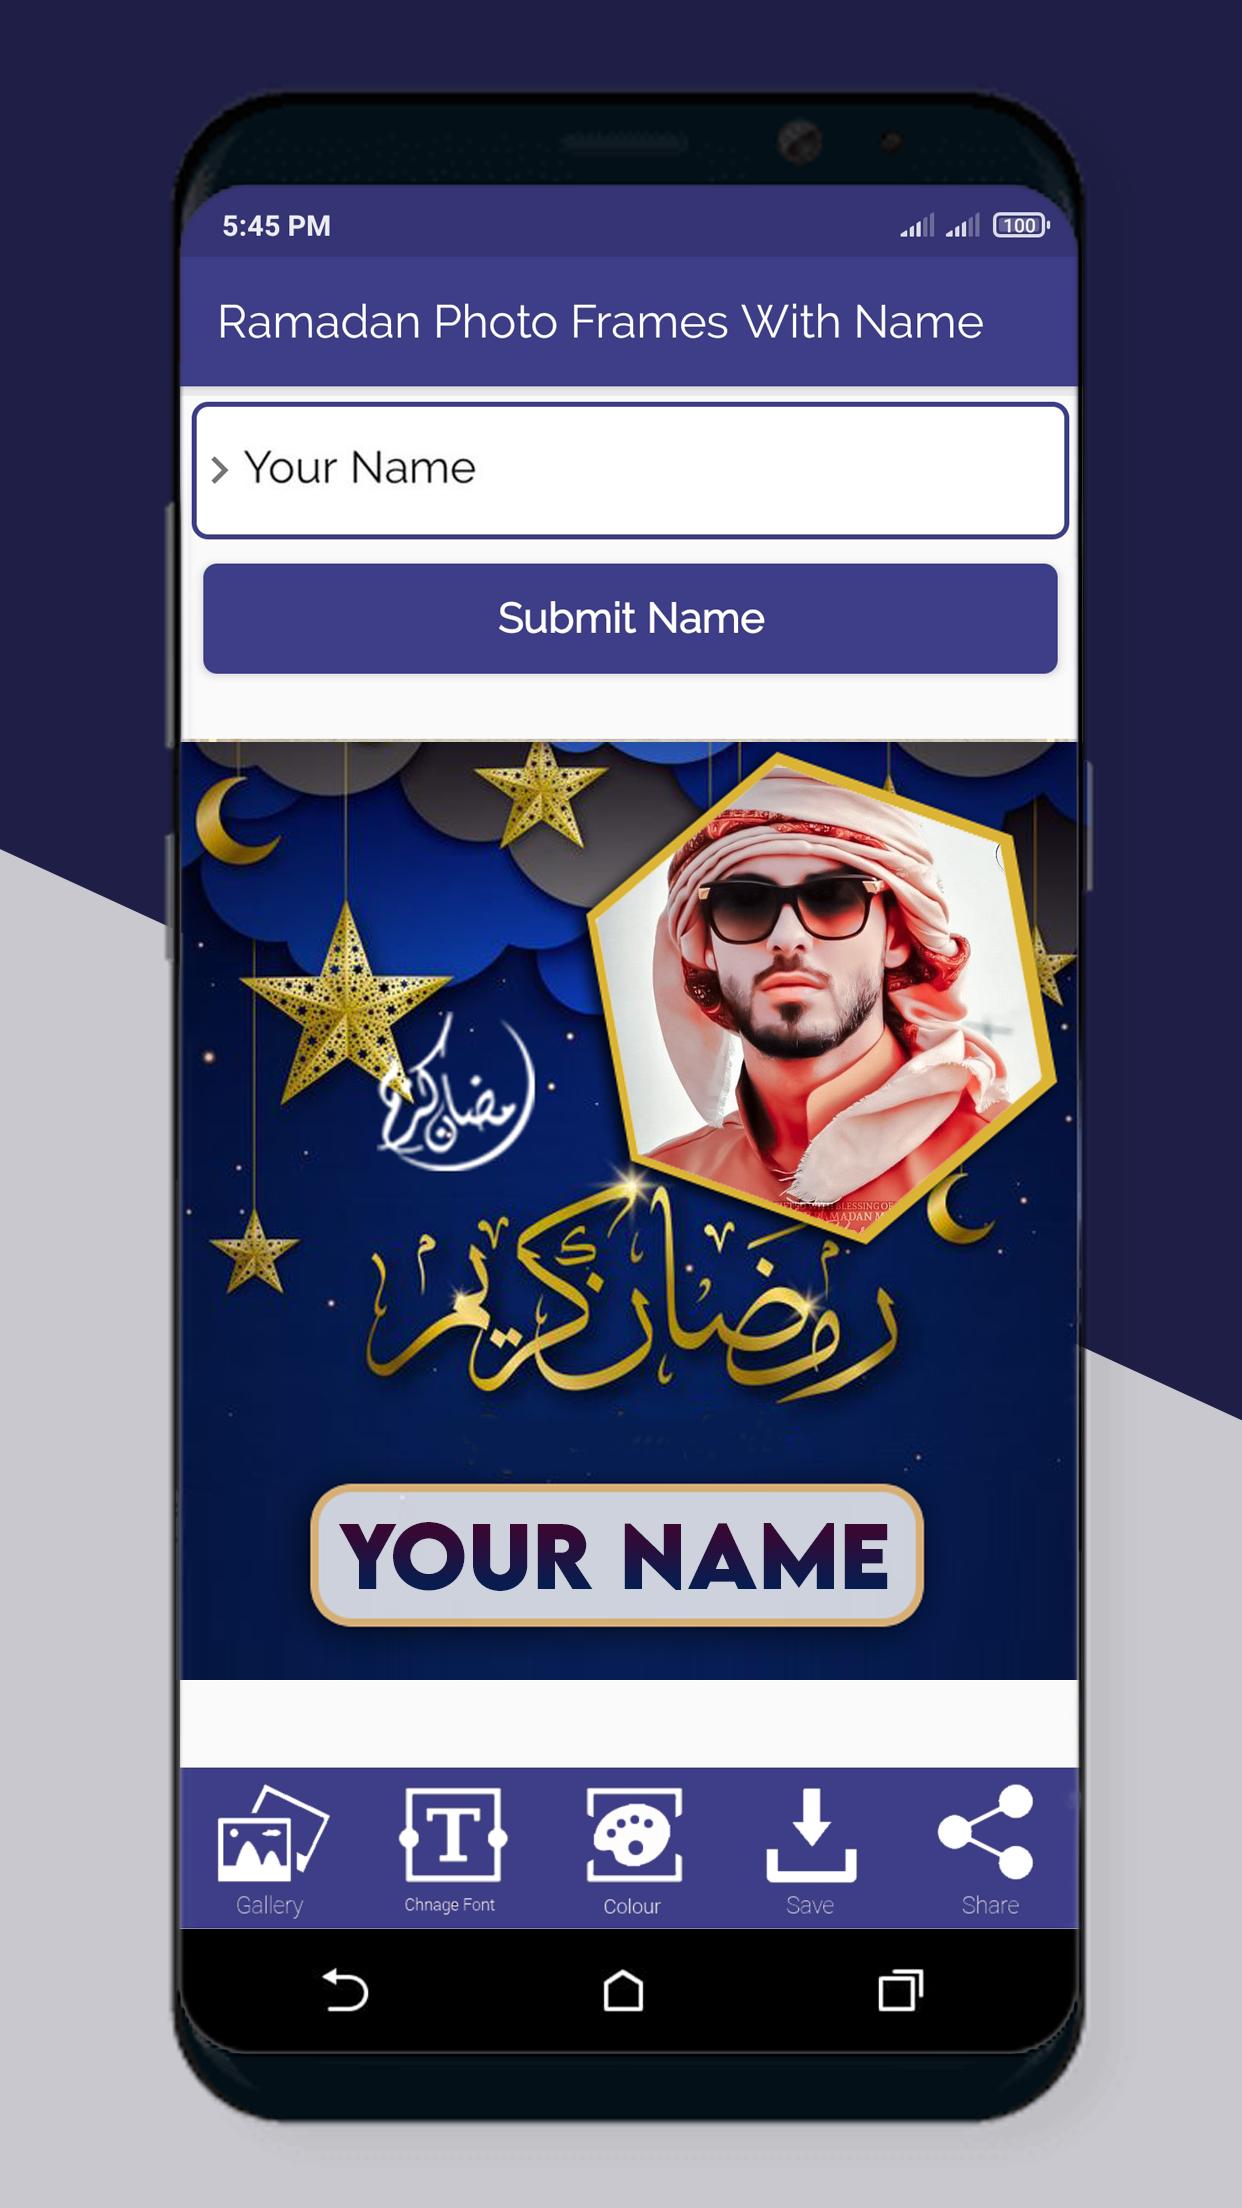 Ramadan 2021 Photo Frames With Name 3.0 Screenshot 2